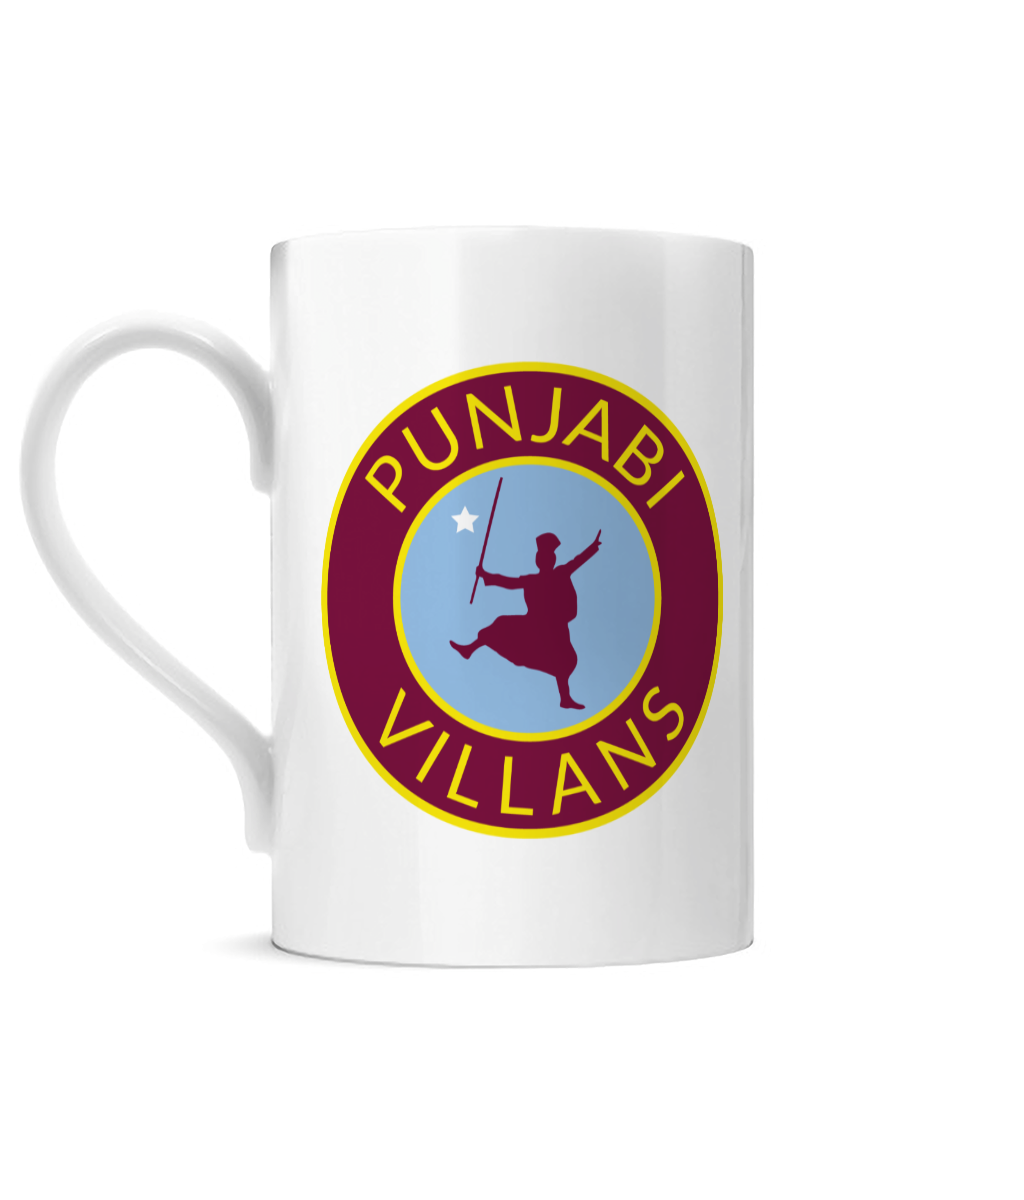 Porcelain Mug 8oz Punjabi Villans